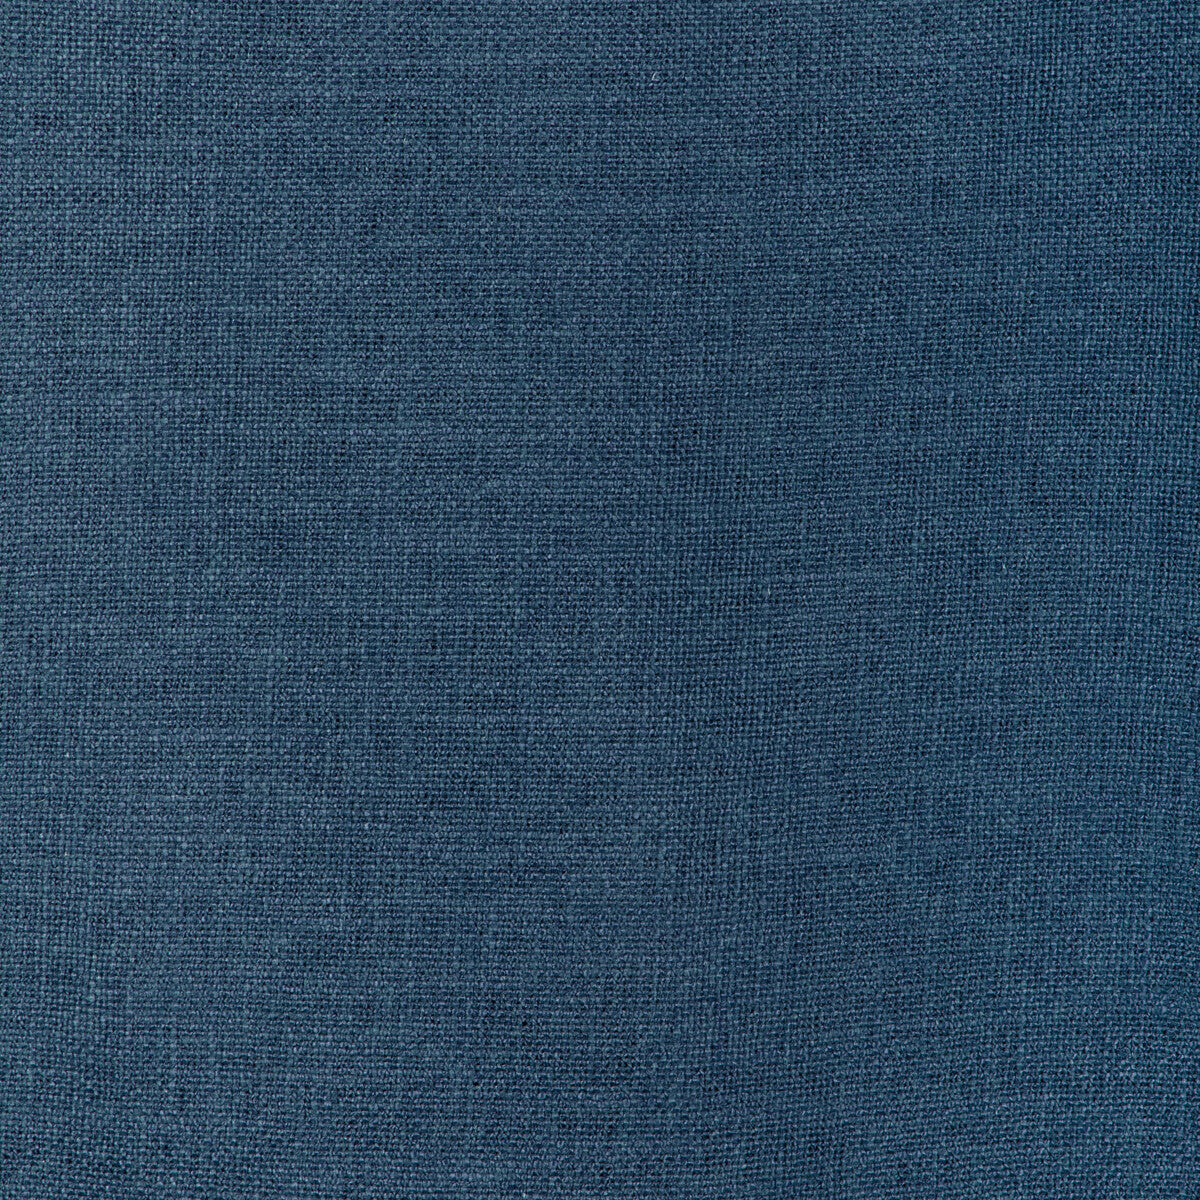 Kravet Design fabric in 90011-5 color - pattern 90011.5.0 - by Kravet Design in the Reveal collection